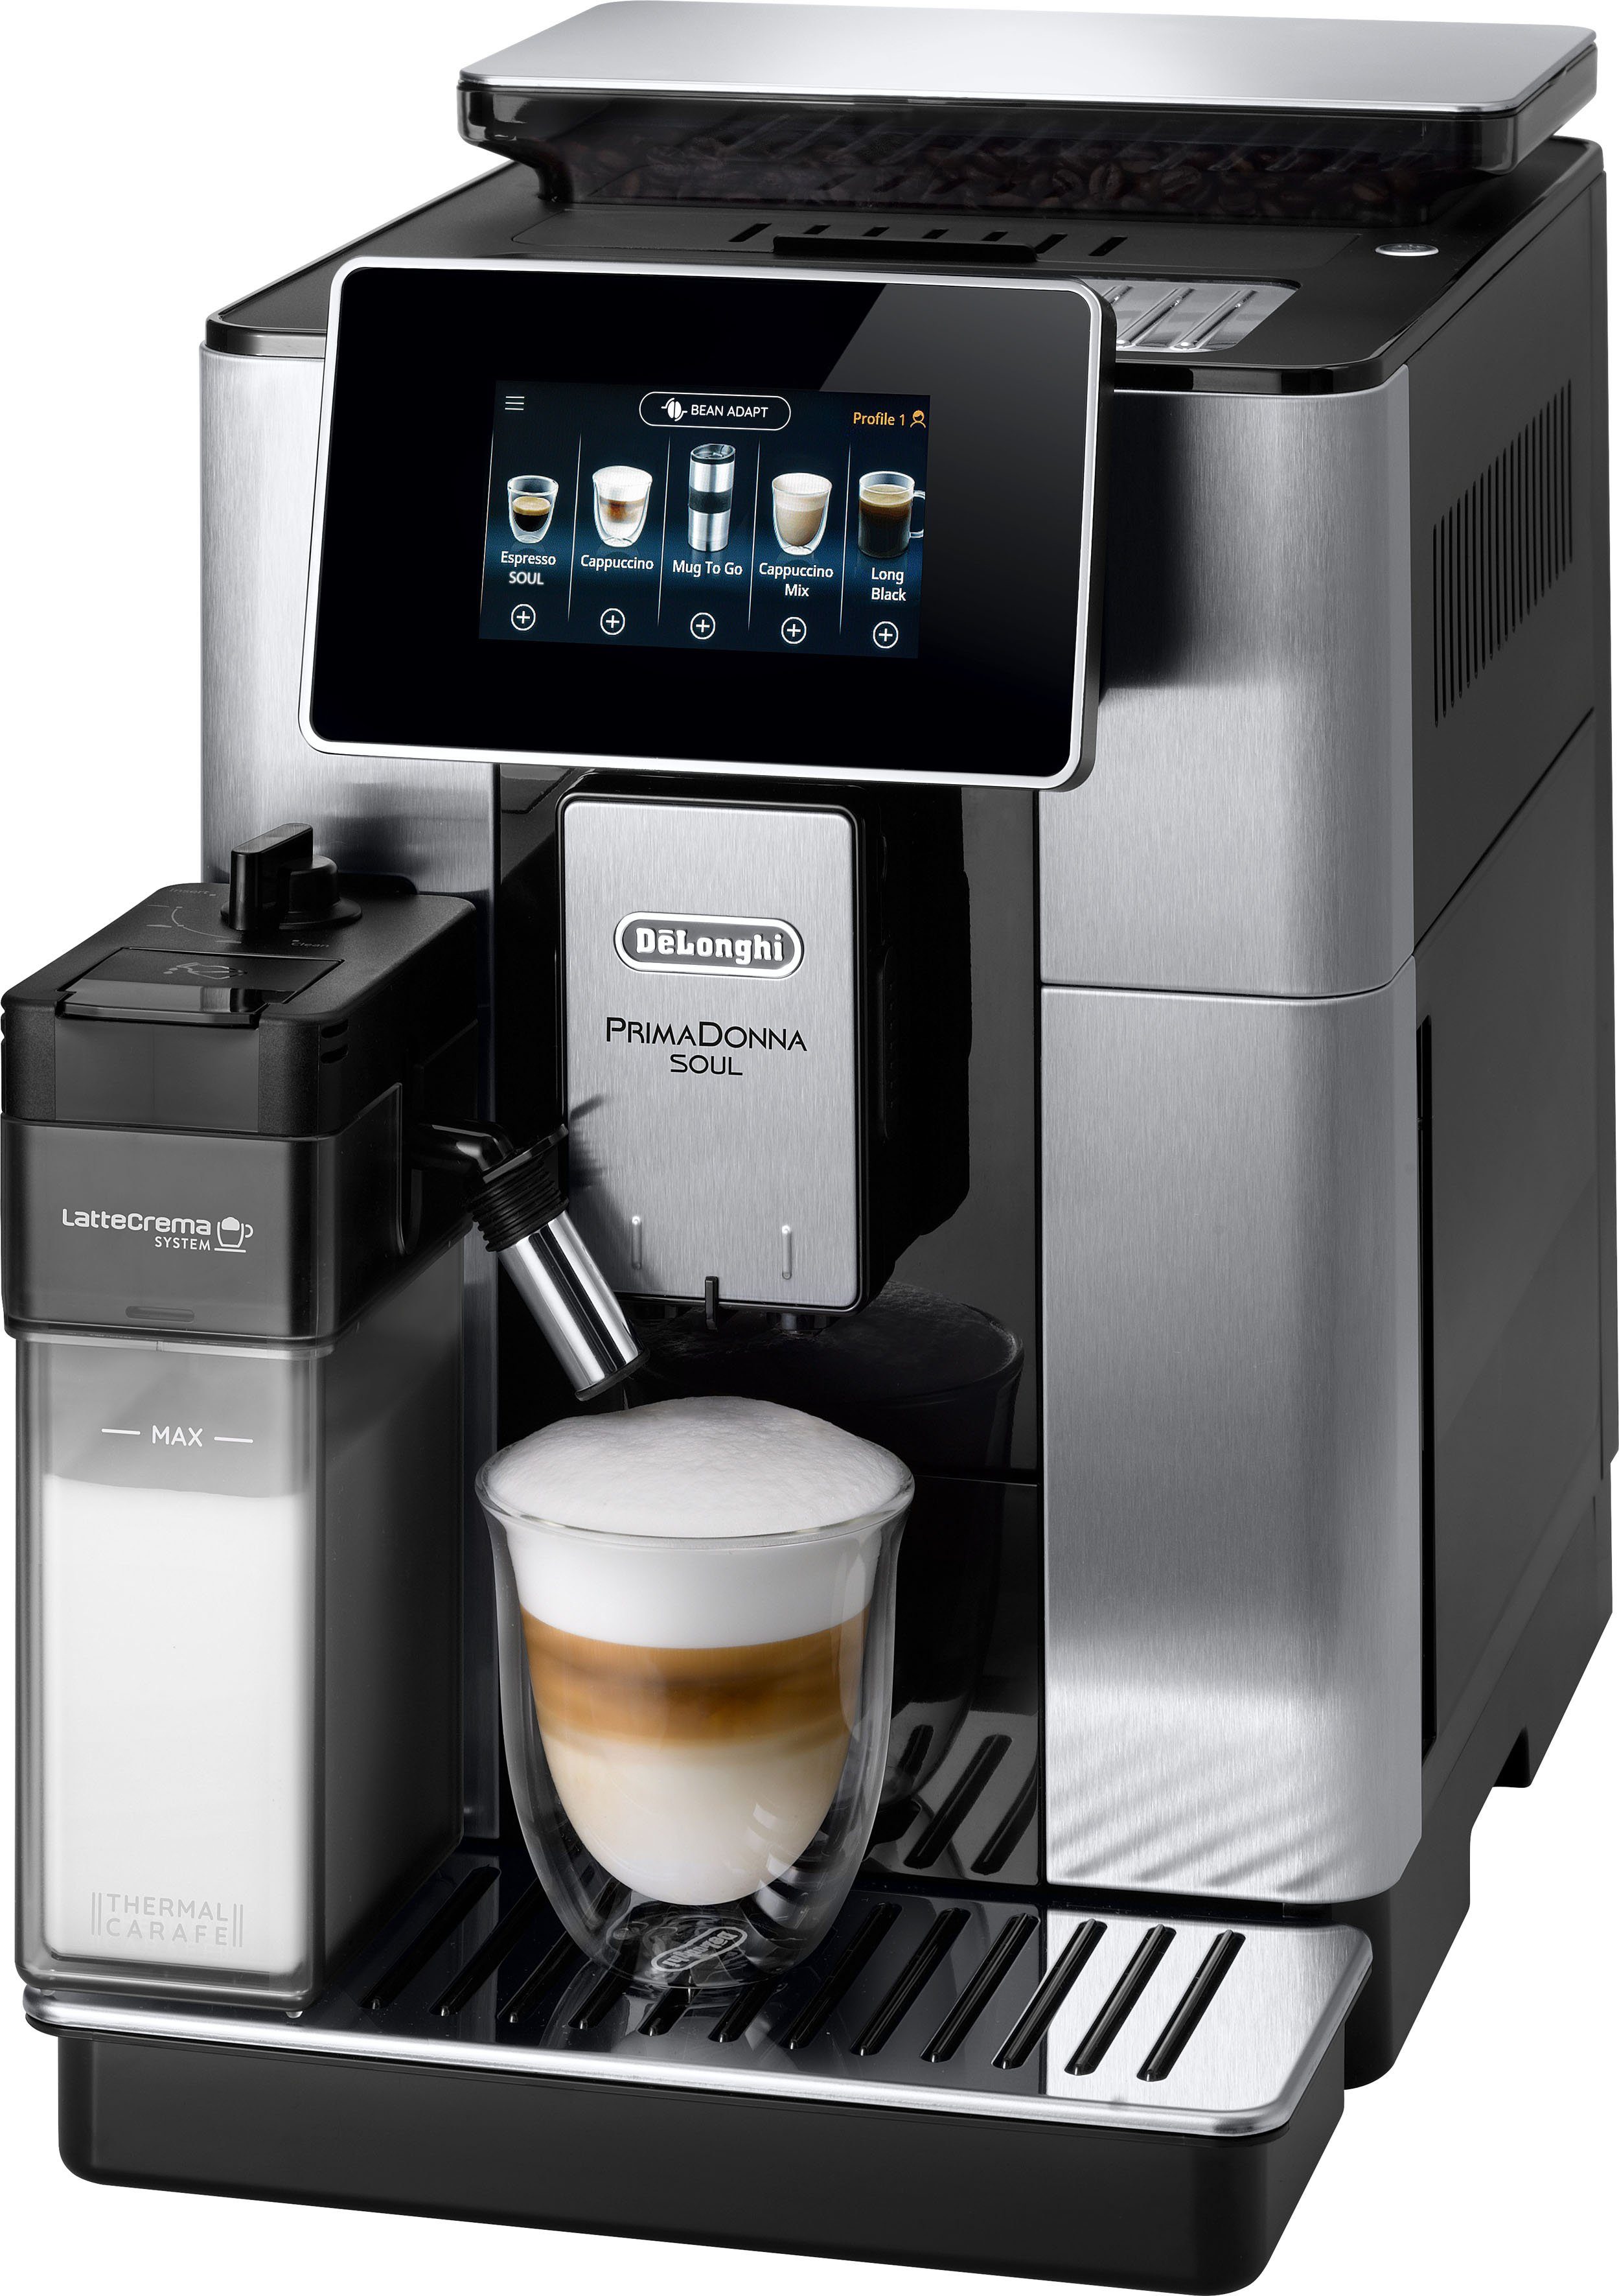 UVP Gläser-Set 29,99 Kaffeevollautomat Wert € inkl. PrimaDonna Kaffeekanne 610.75.MB, ECAM De'Longhi UVP von im € 46,90 Soul +